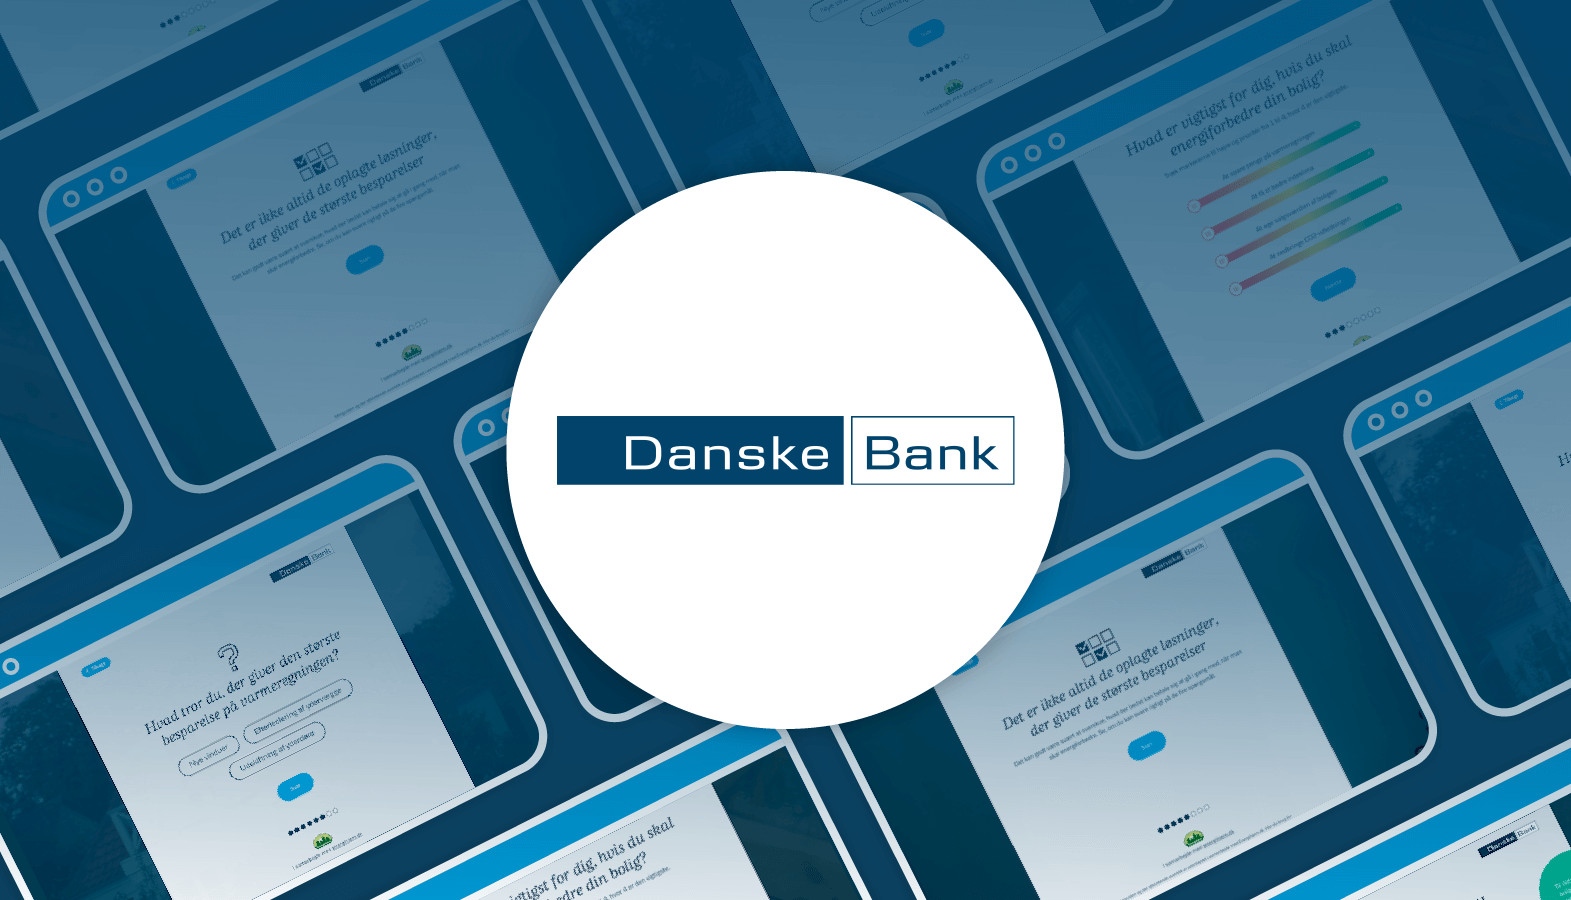 Danske Bank Customer Story with Playable